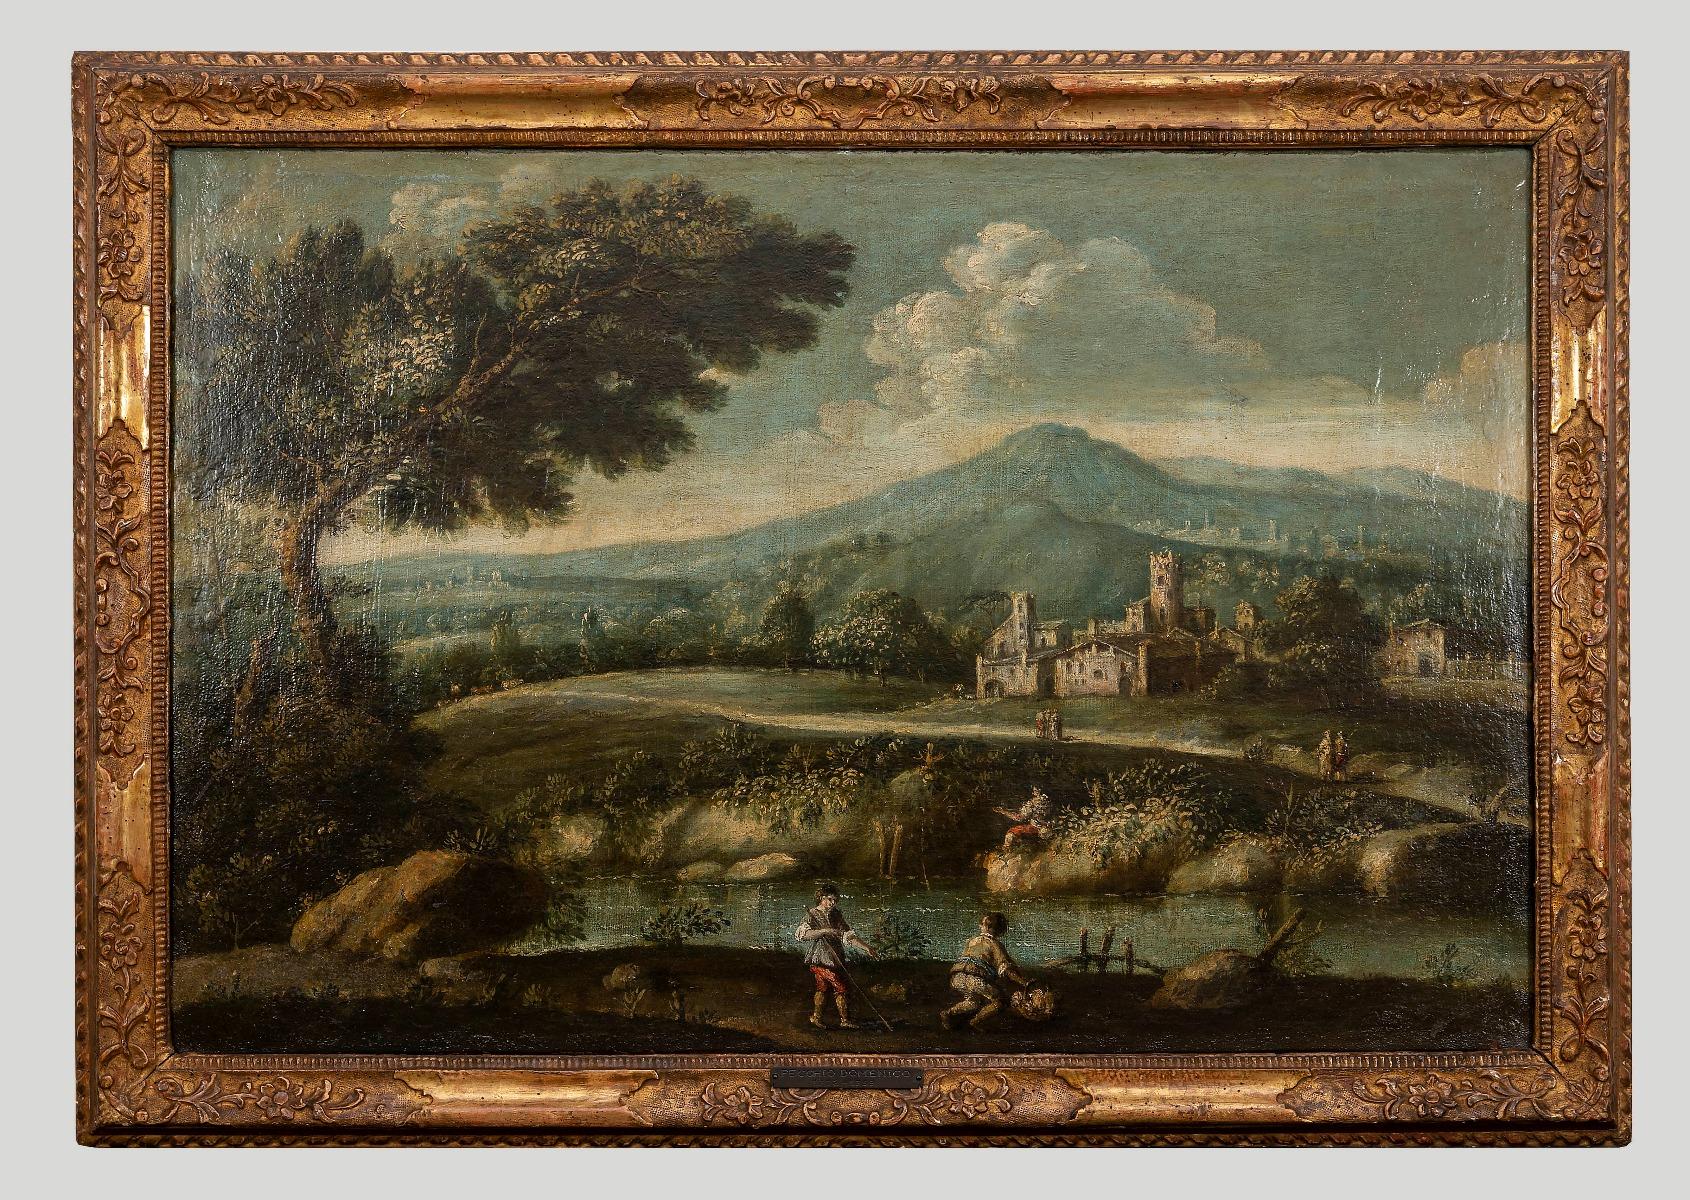 Landscape with figures - Original Oil Paint On Canvas - 18th Century